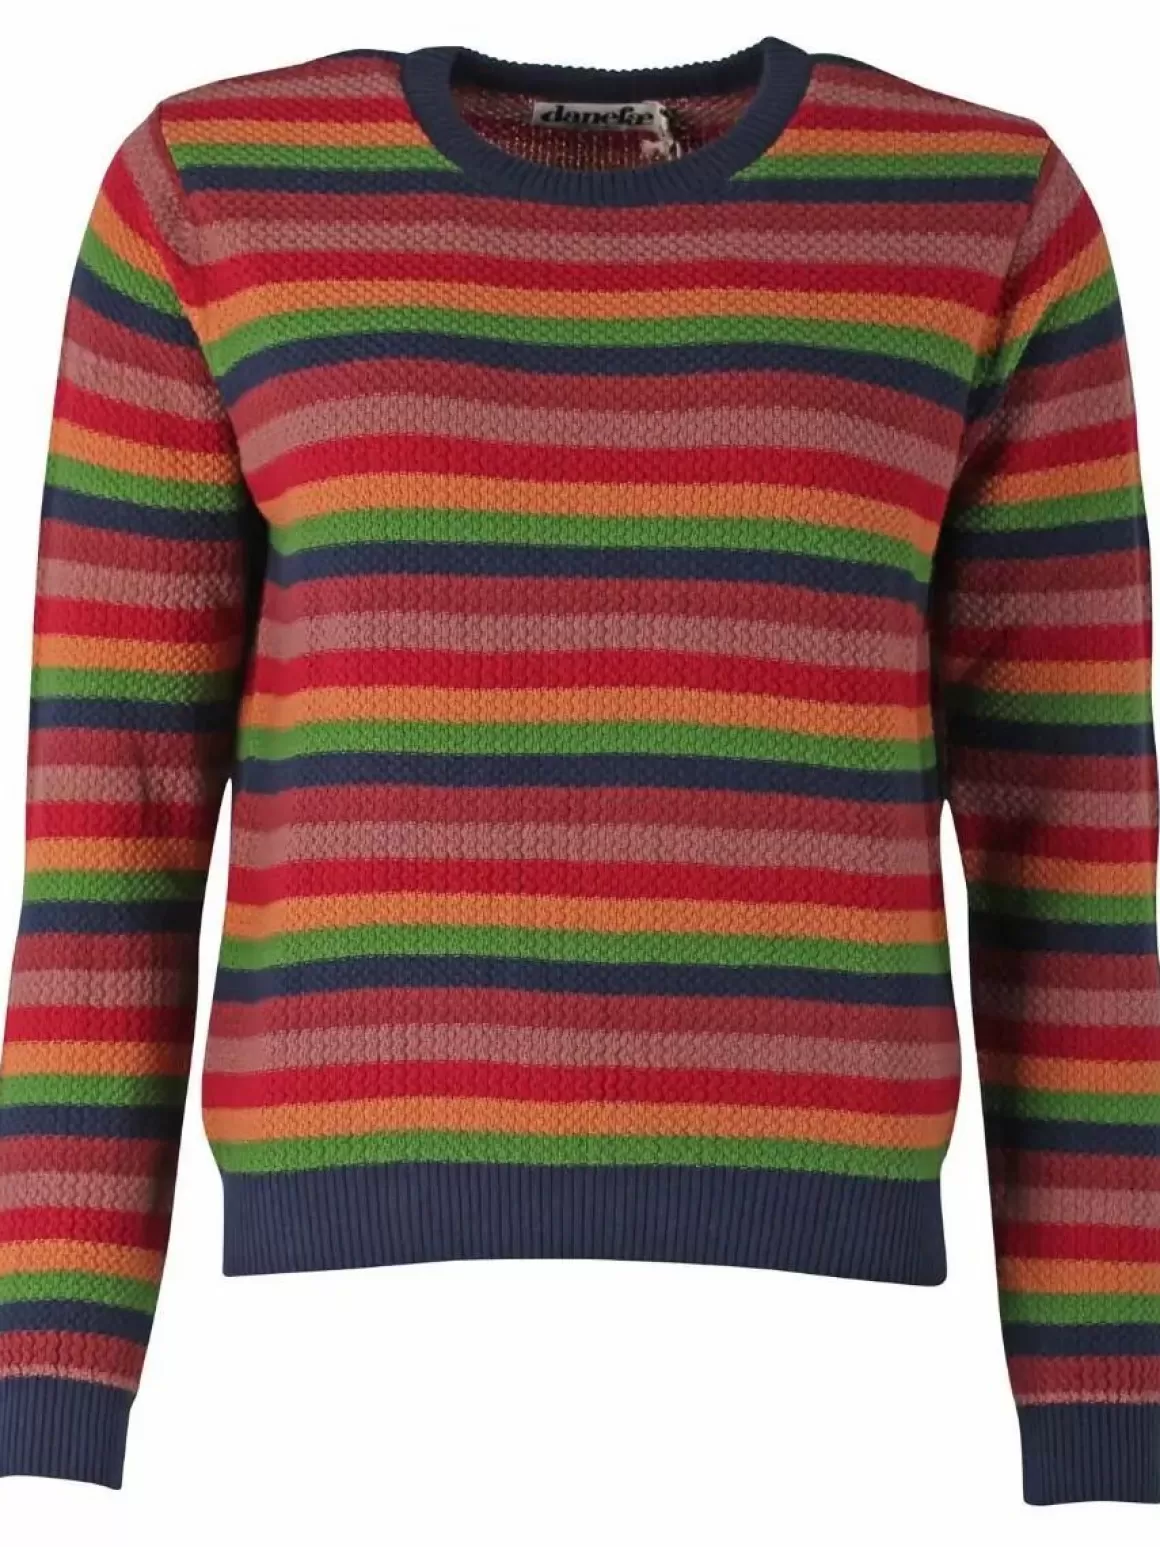 Damen Danefæ Danepearly Hole Knit Sweater Tonic Stripe